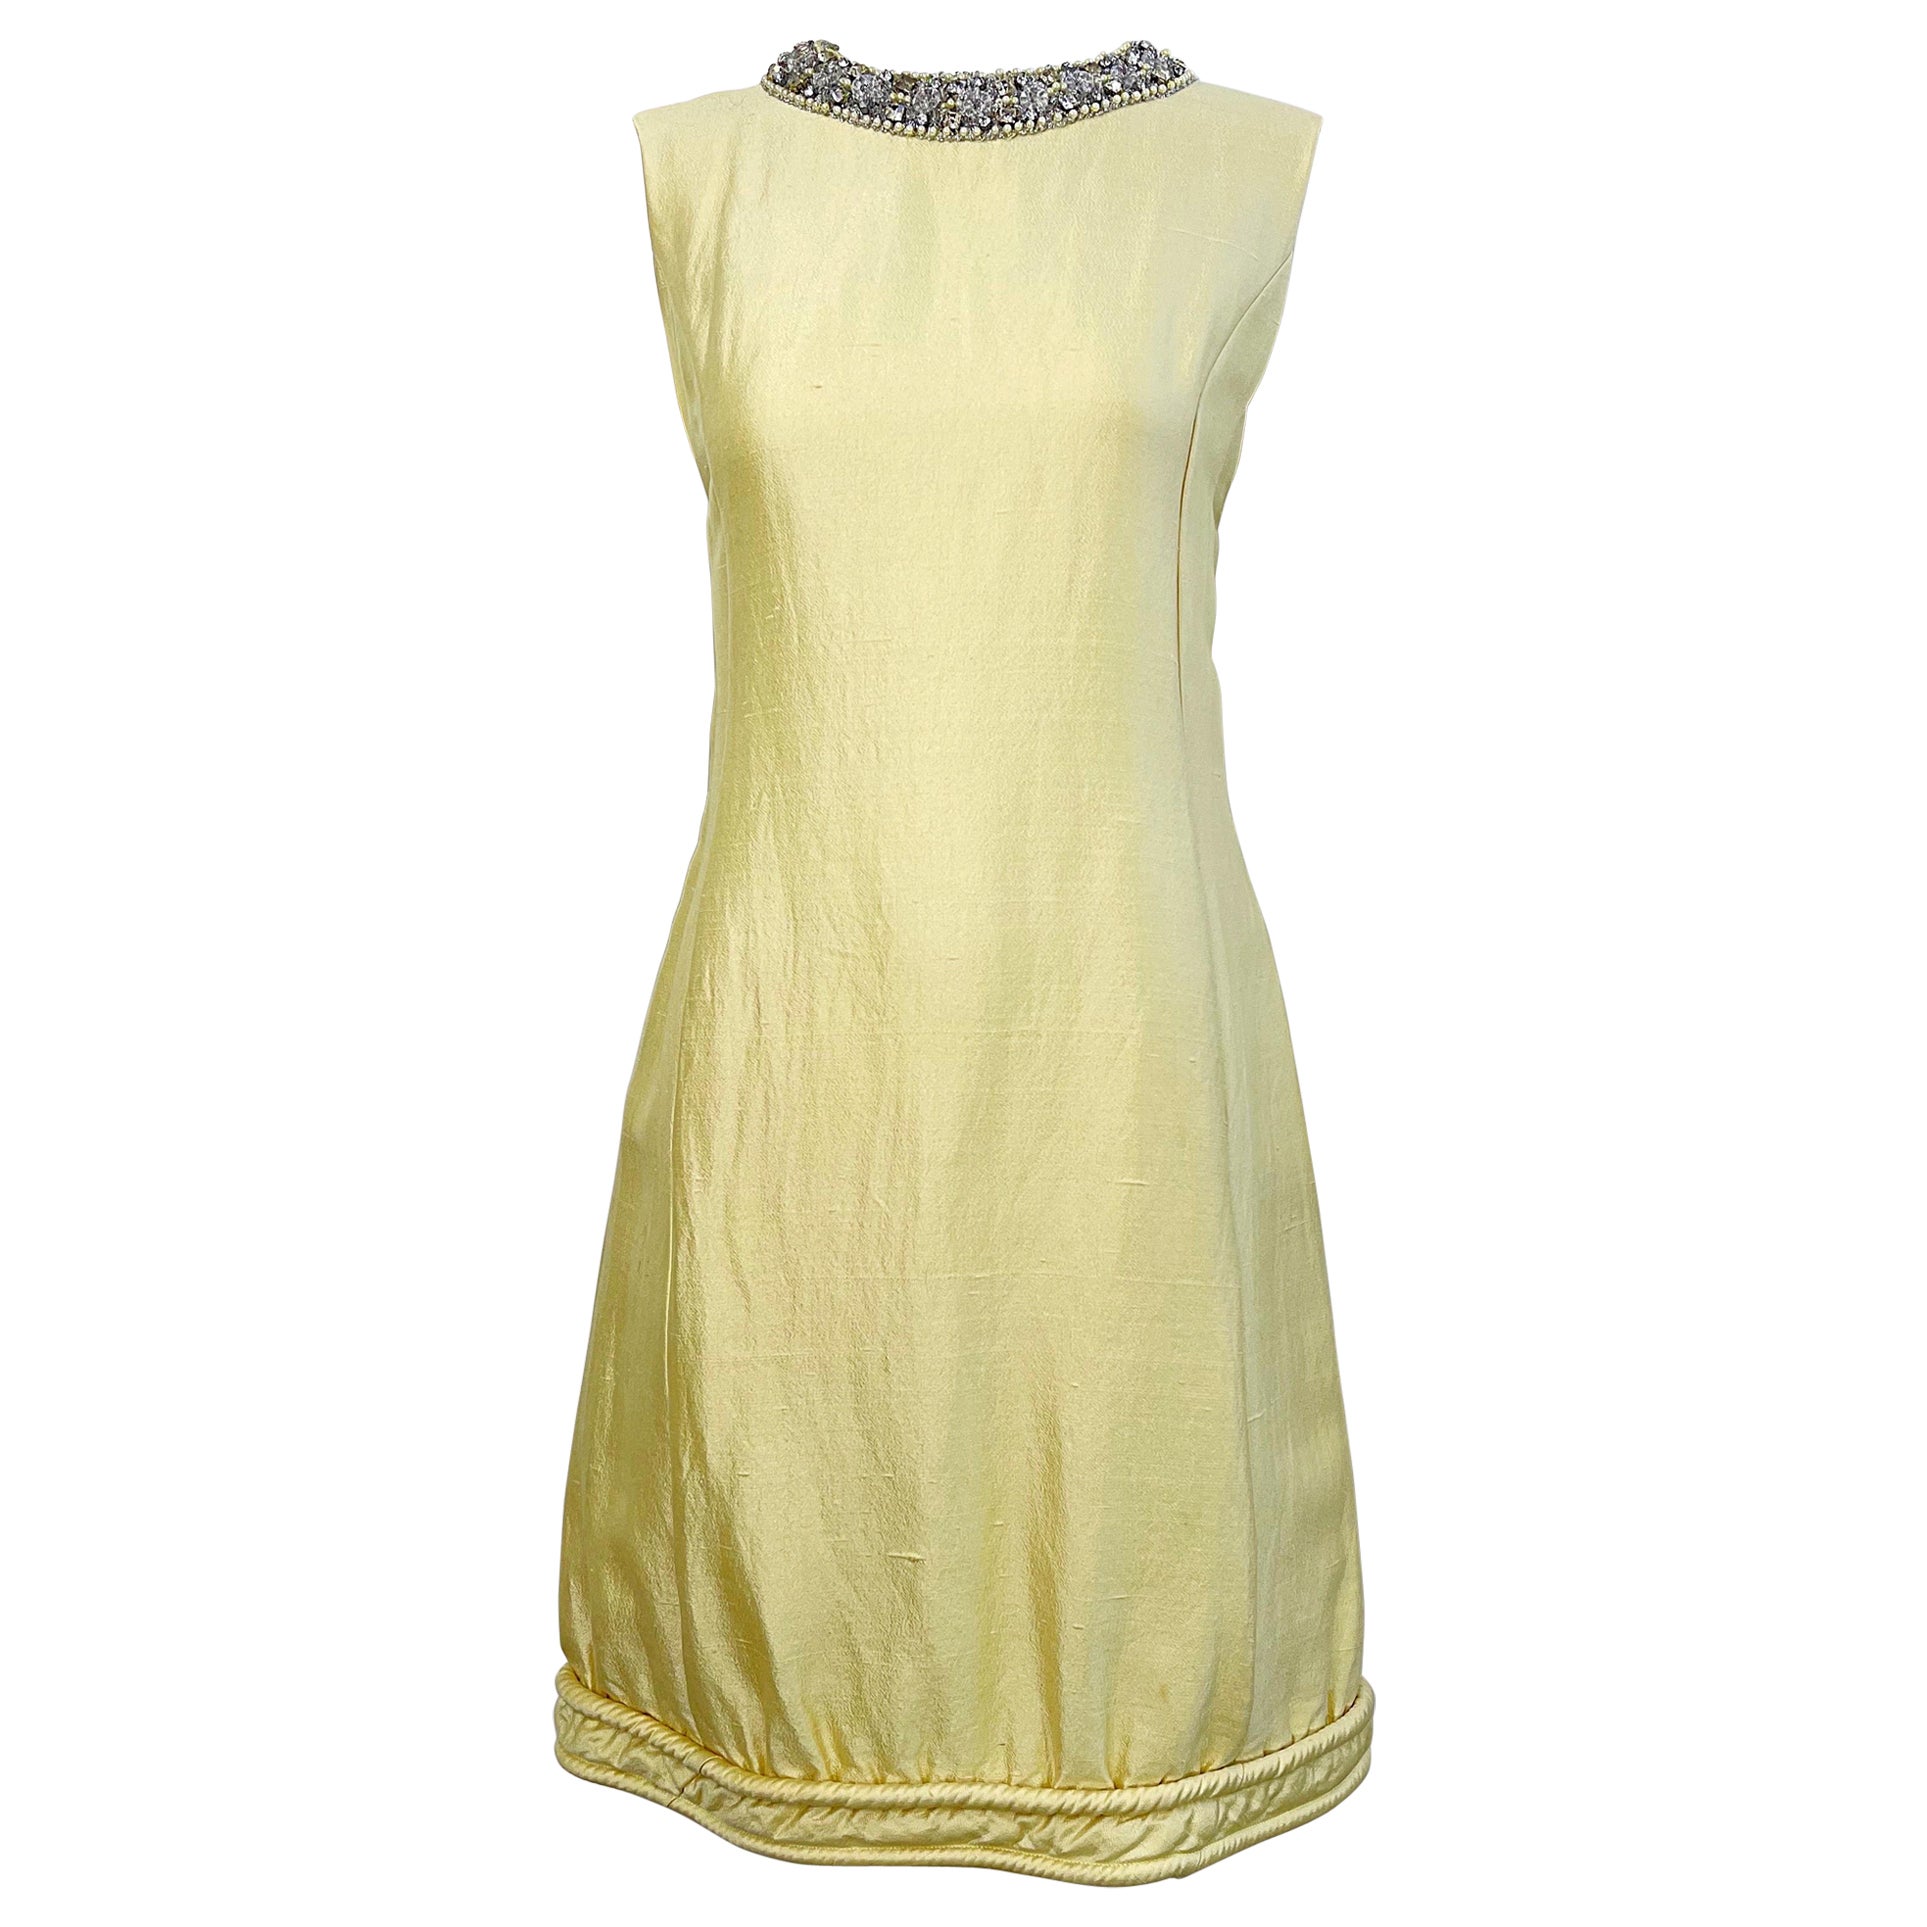 Chic 1960s Pale Yellow Silk Shantung Rhinestone Beaded Vintage 60s Shift Dress